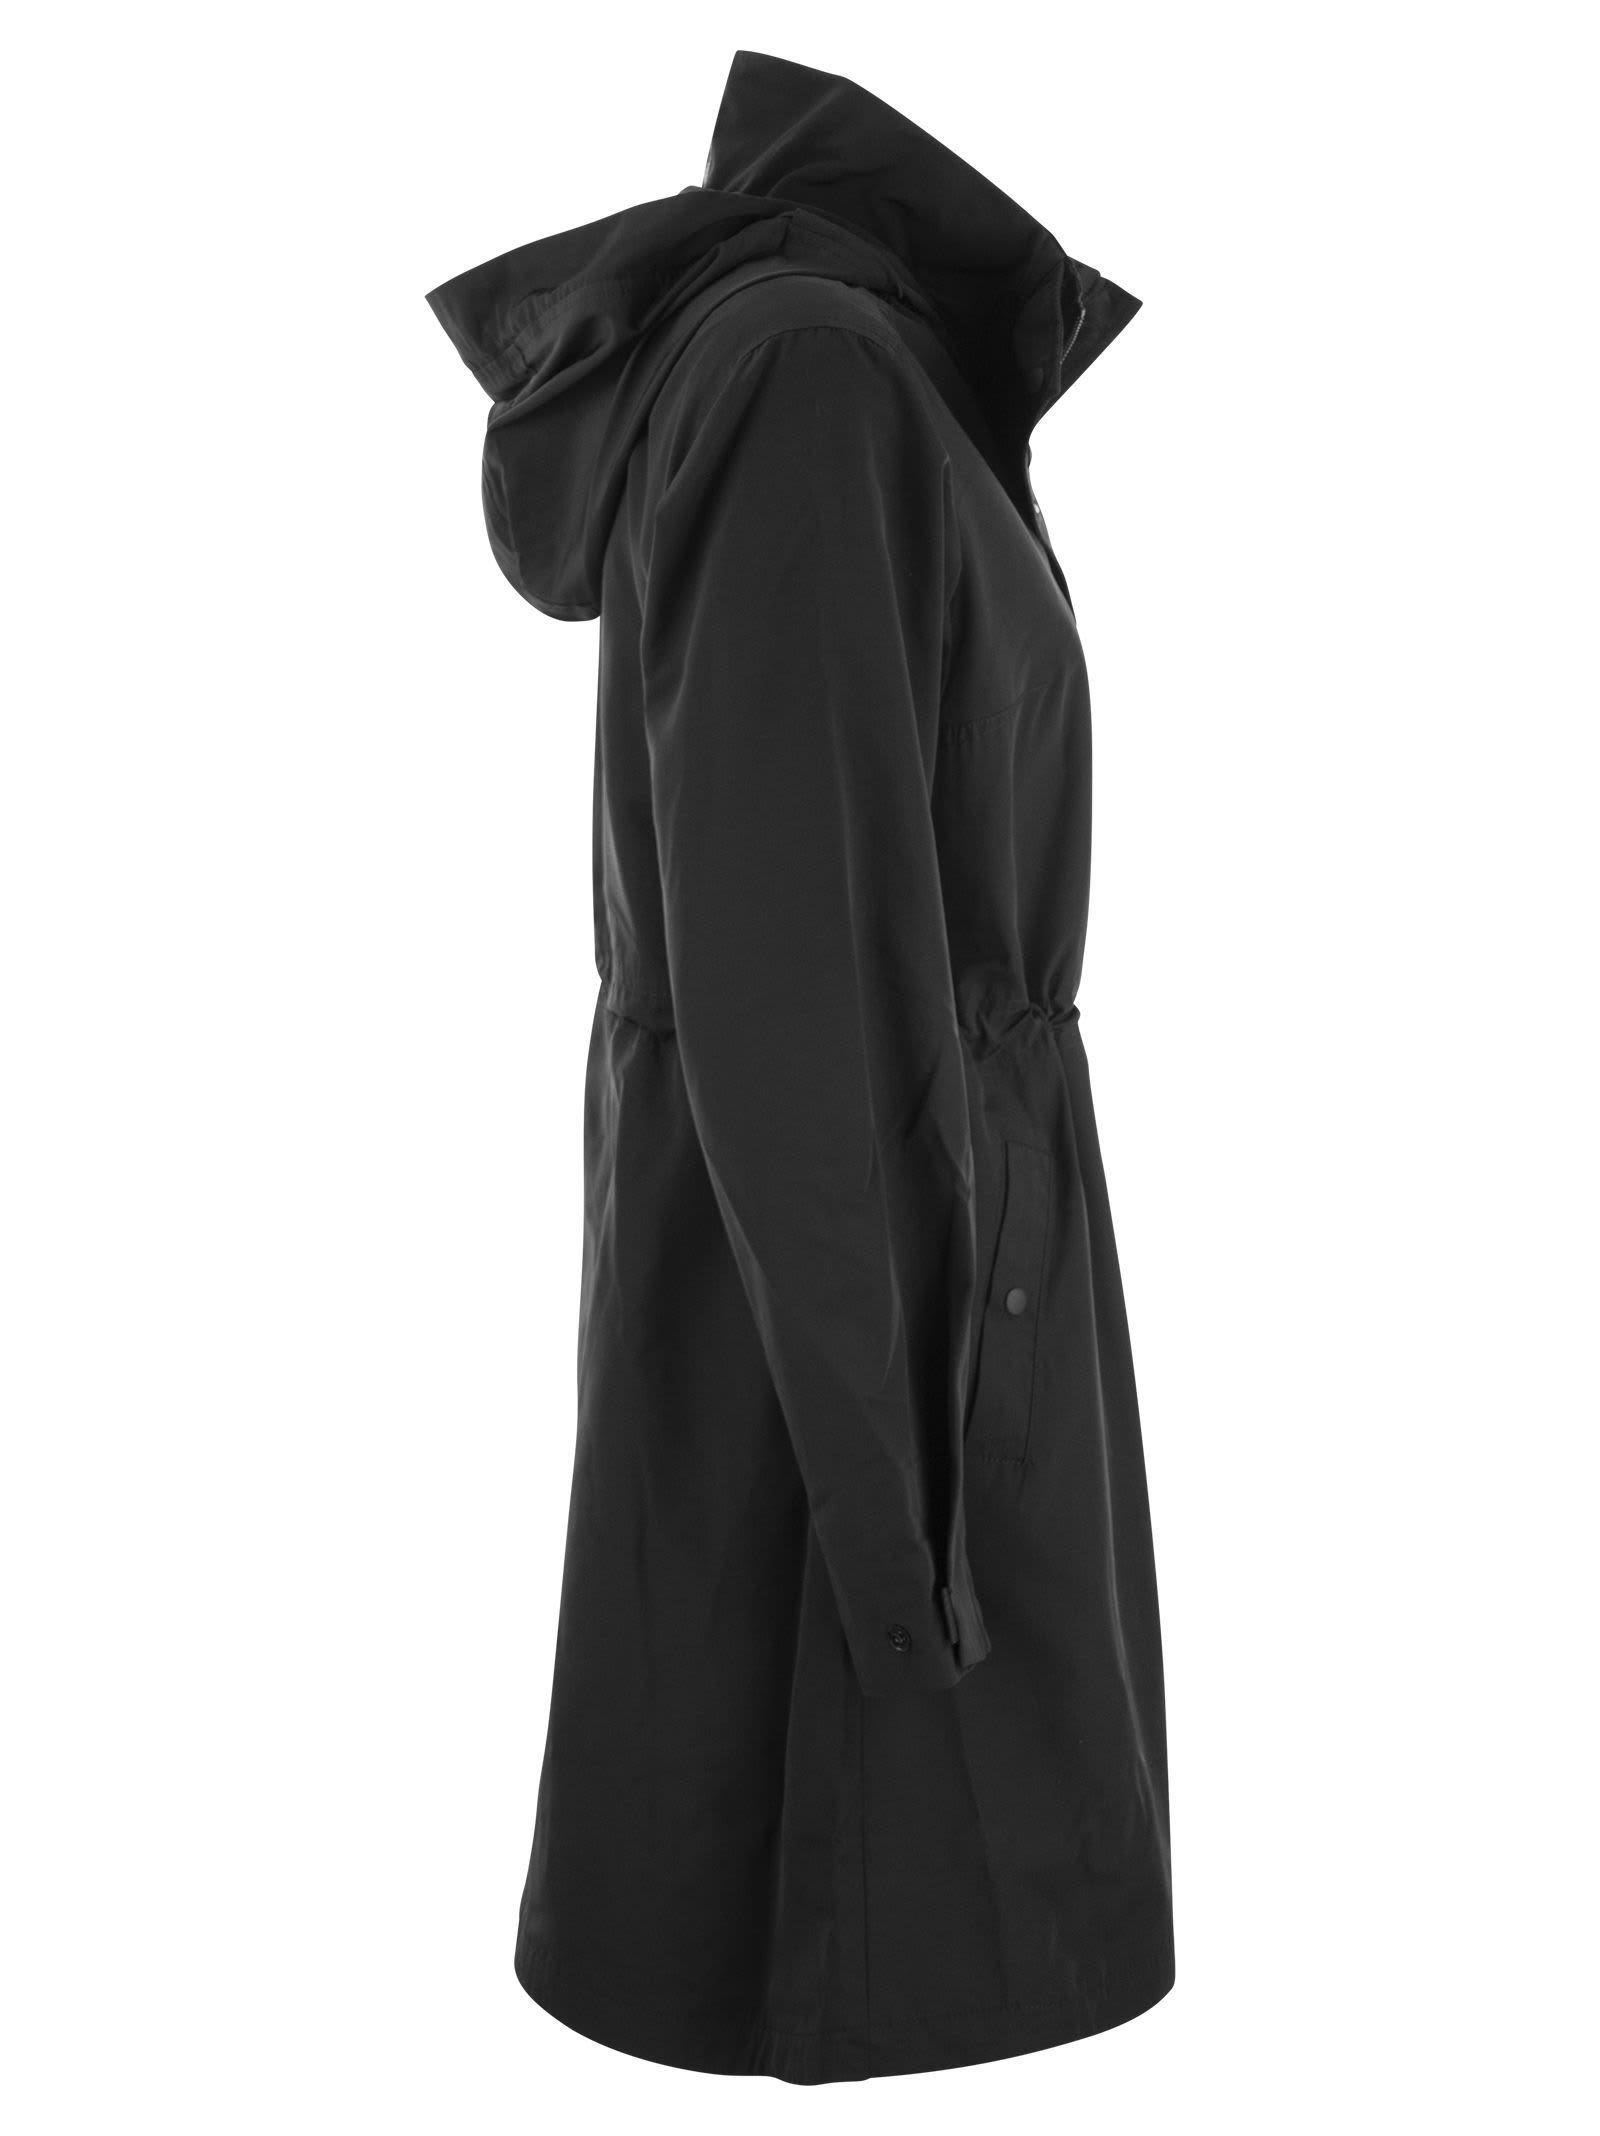 Shop Canada Goose Belcarra - Jacket In Black